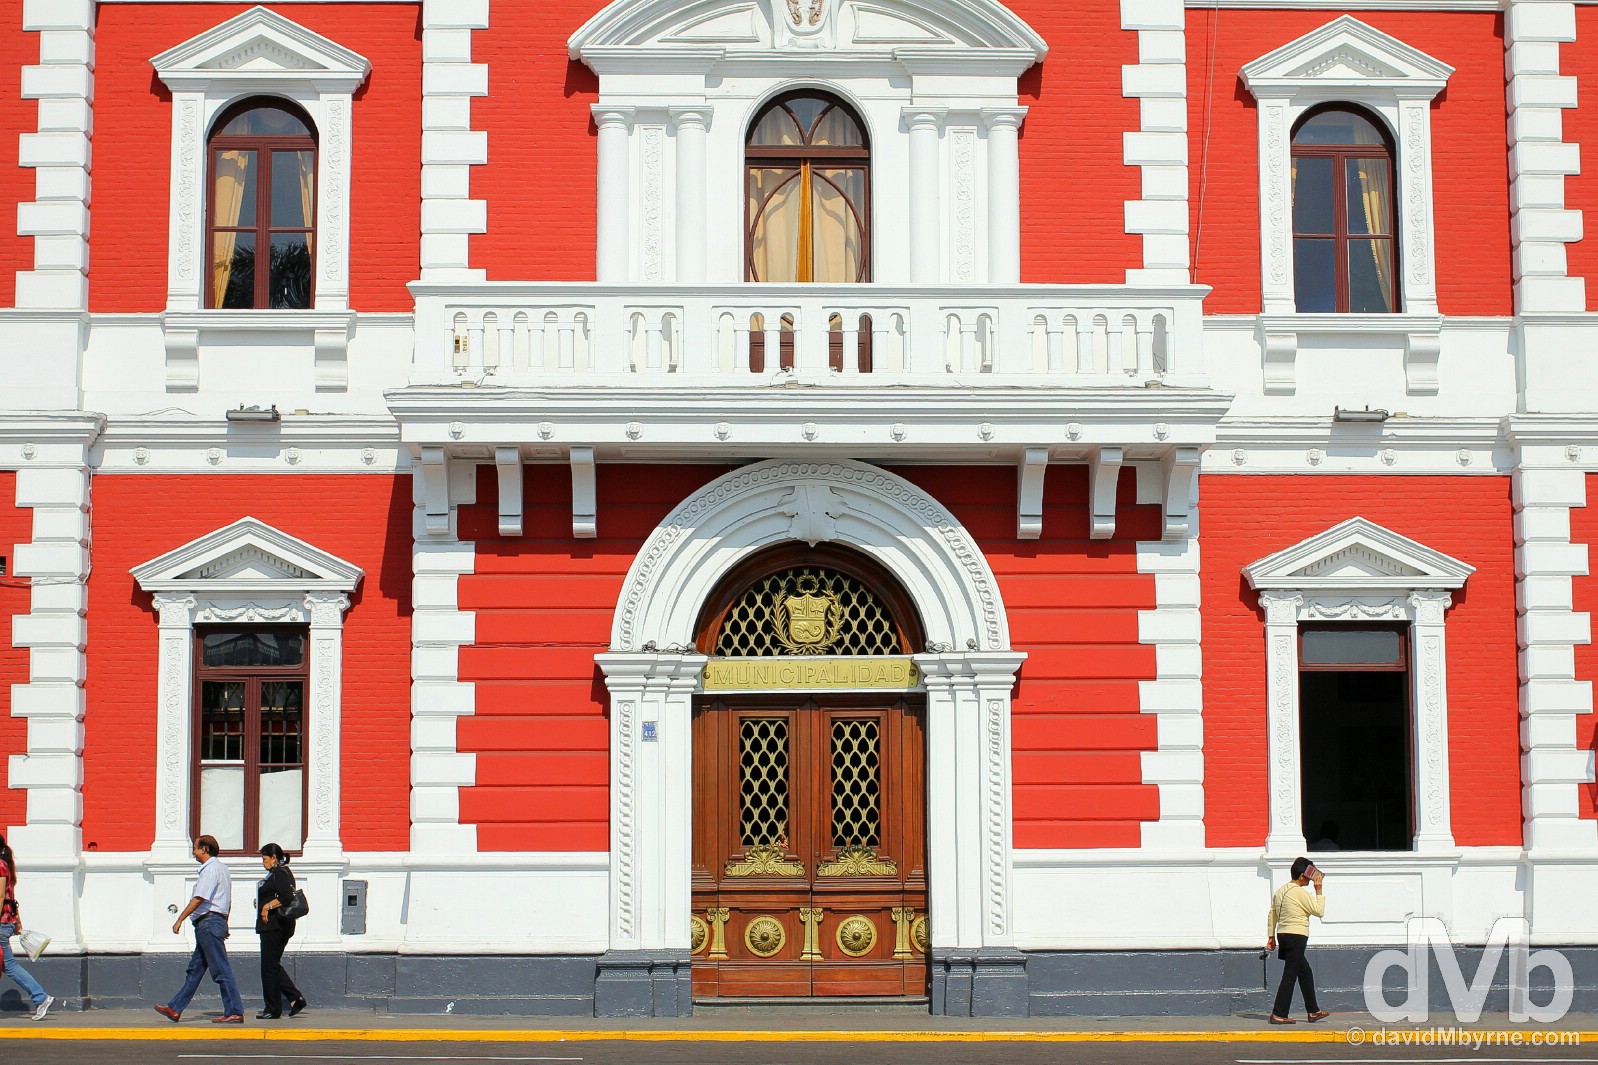 The Municipalidad building on Plaza Major in the city of Trujillo, northwestern Peru. July 31, 2015. 